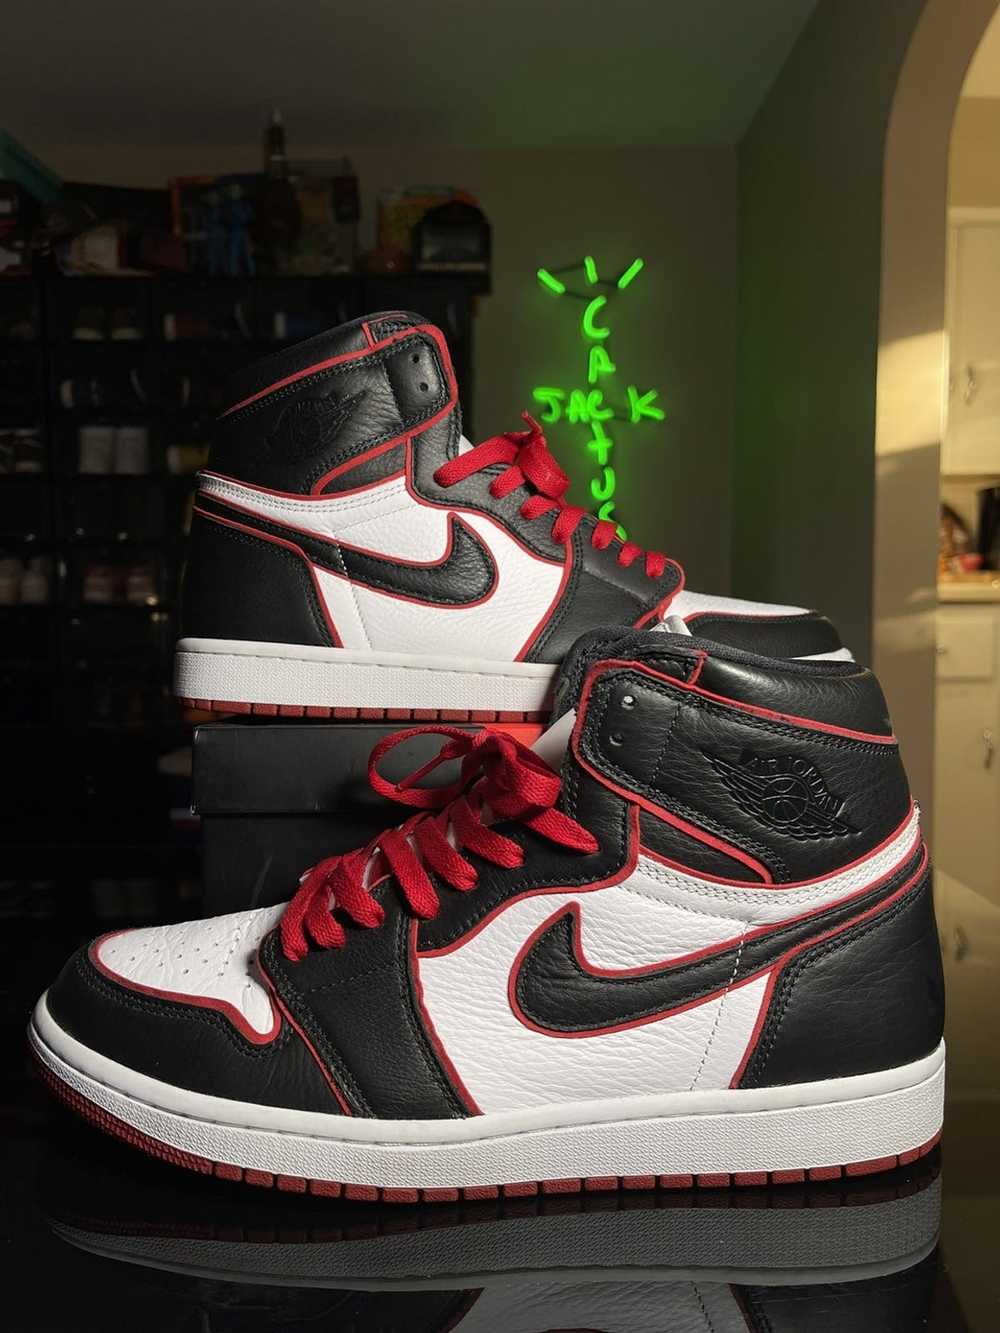 Jordan Brand Nike Air Jordan 1 “Bloodline” - image 2